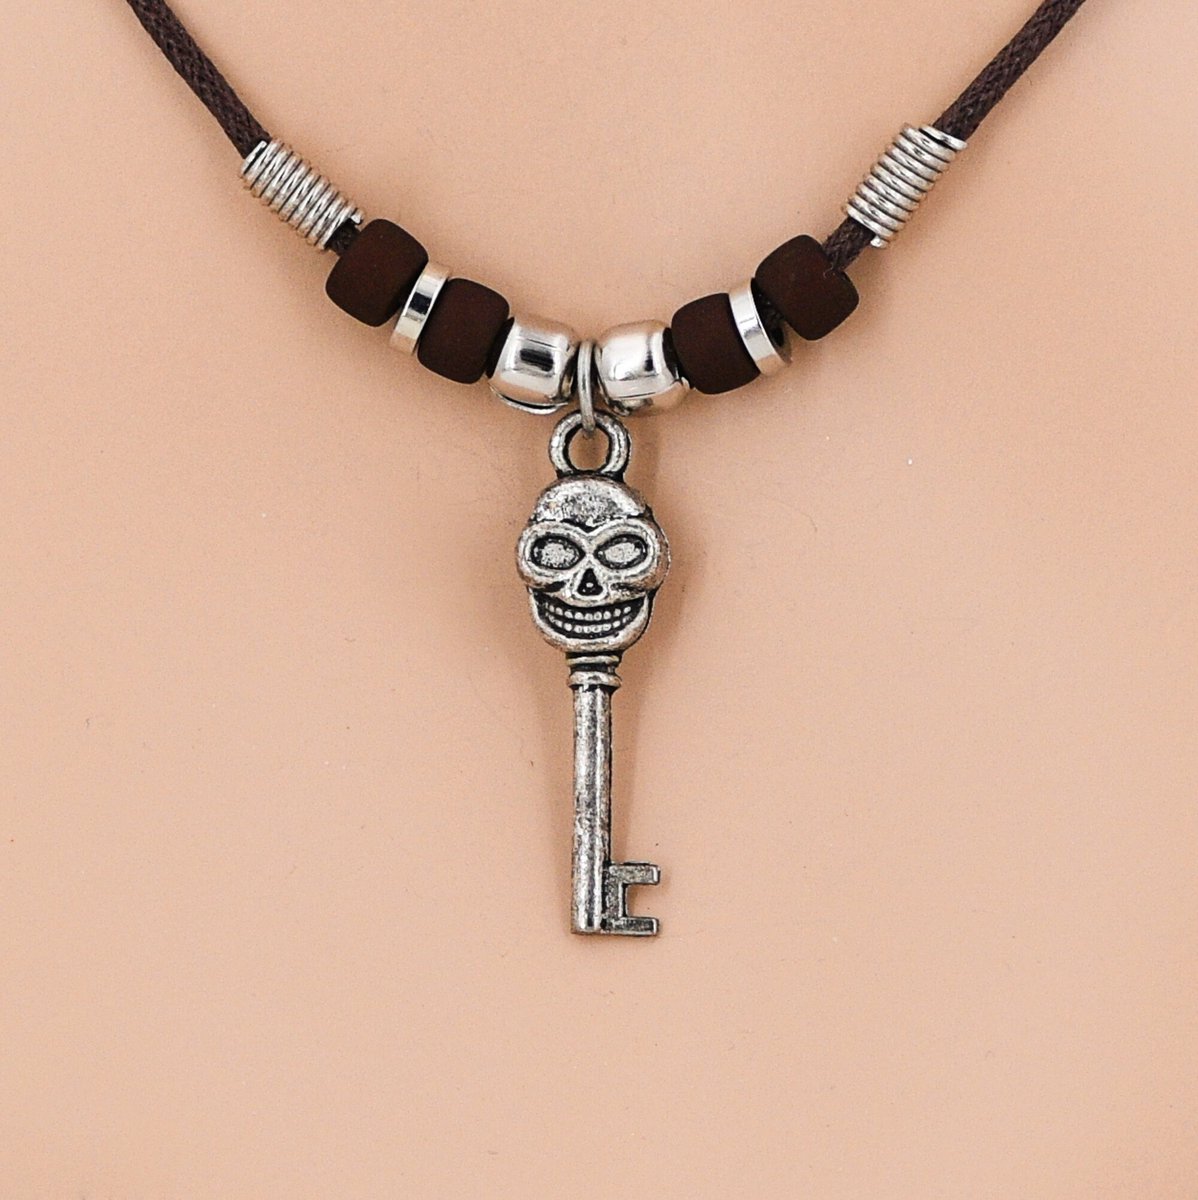 Skeleton Key Necklace 14' to 19' on Beaded Brown Cord Pirate, Skulls 9014-SKEL-KEY #sup #NecklacePendant 
$13.25
➤ grassshacktrading.etsy.com/listing/124943…